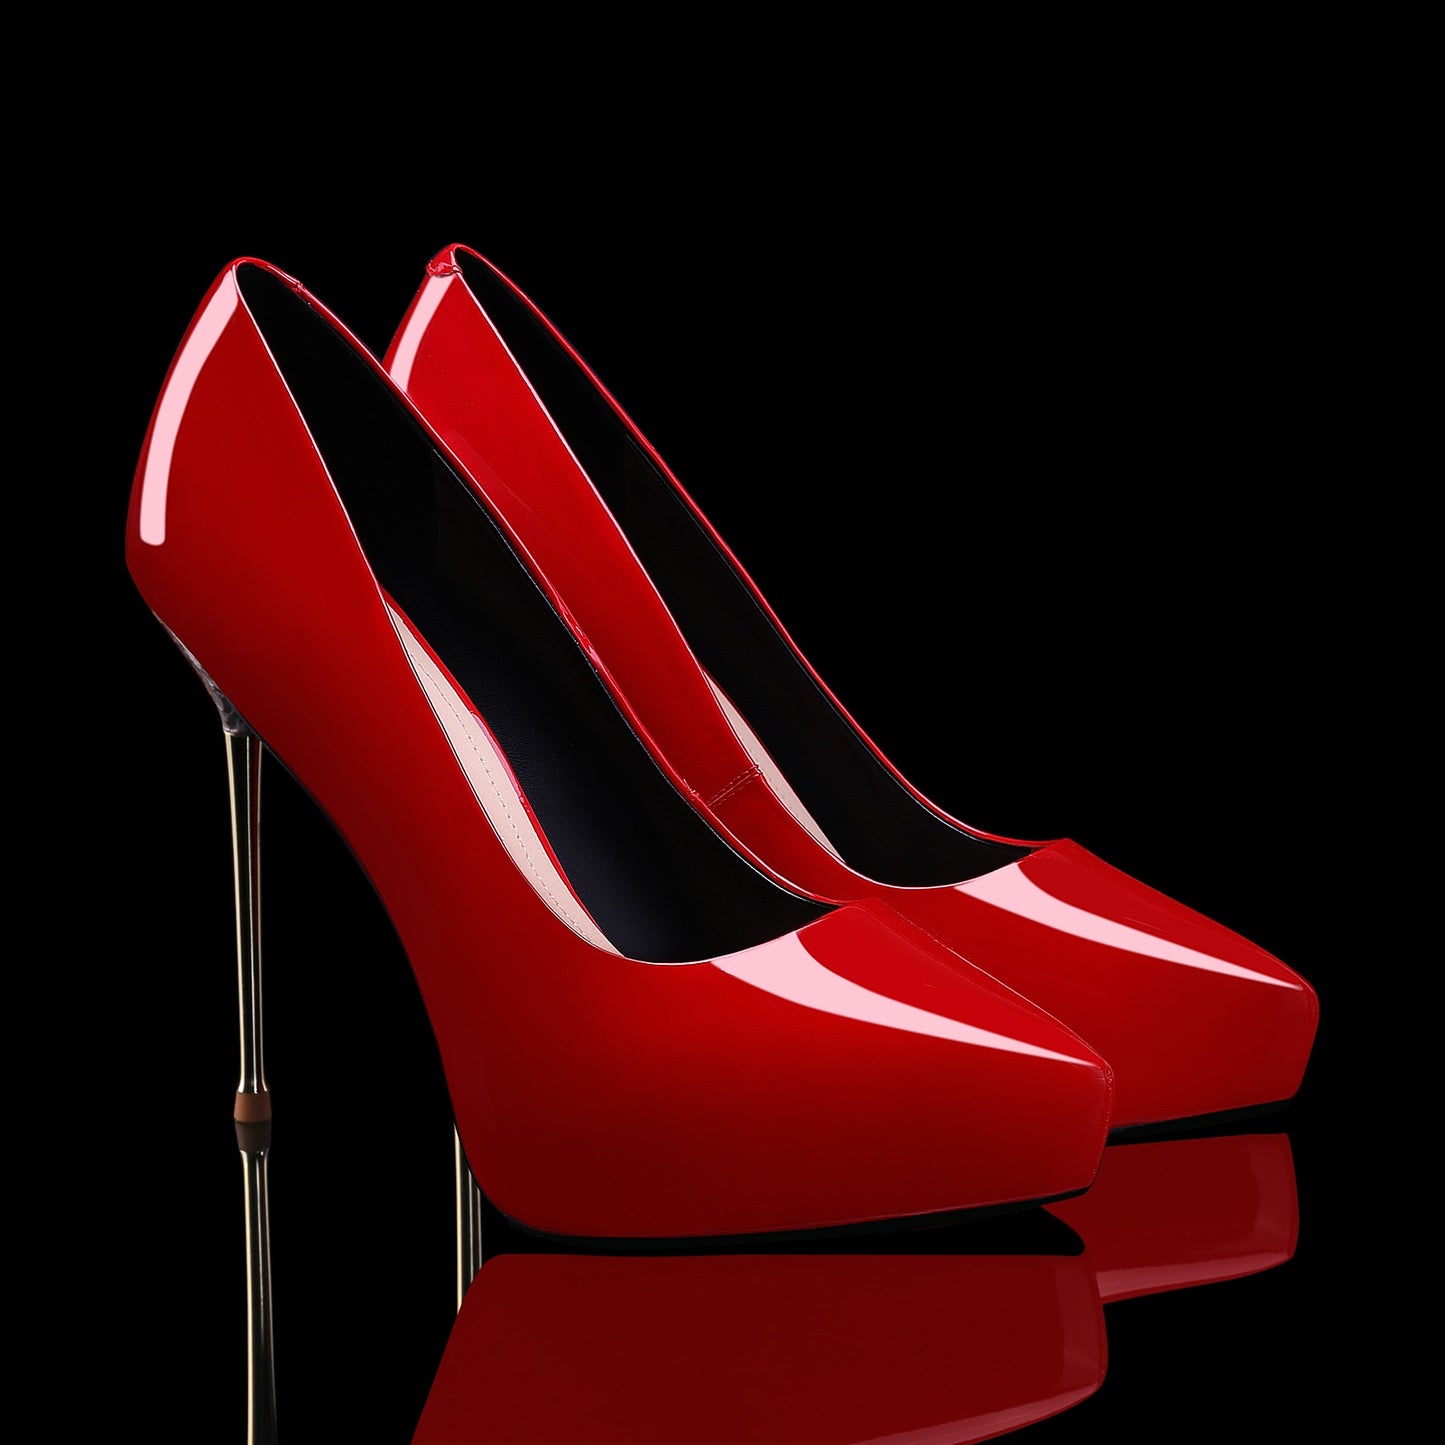 Pumps Shoes Women Platform Patent Leather Heels Platform Dress